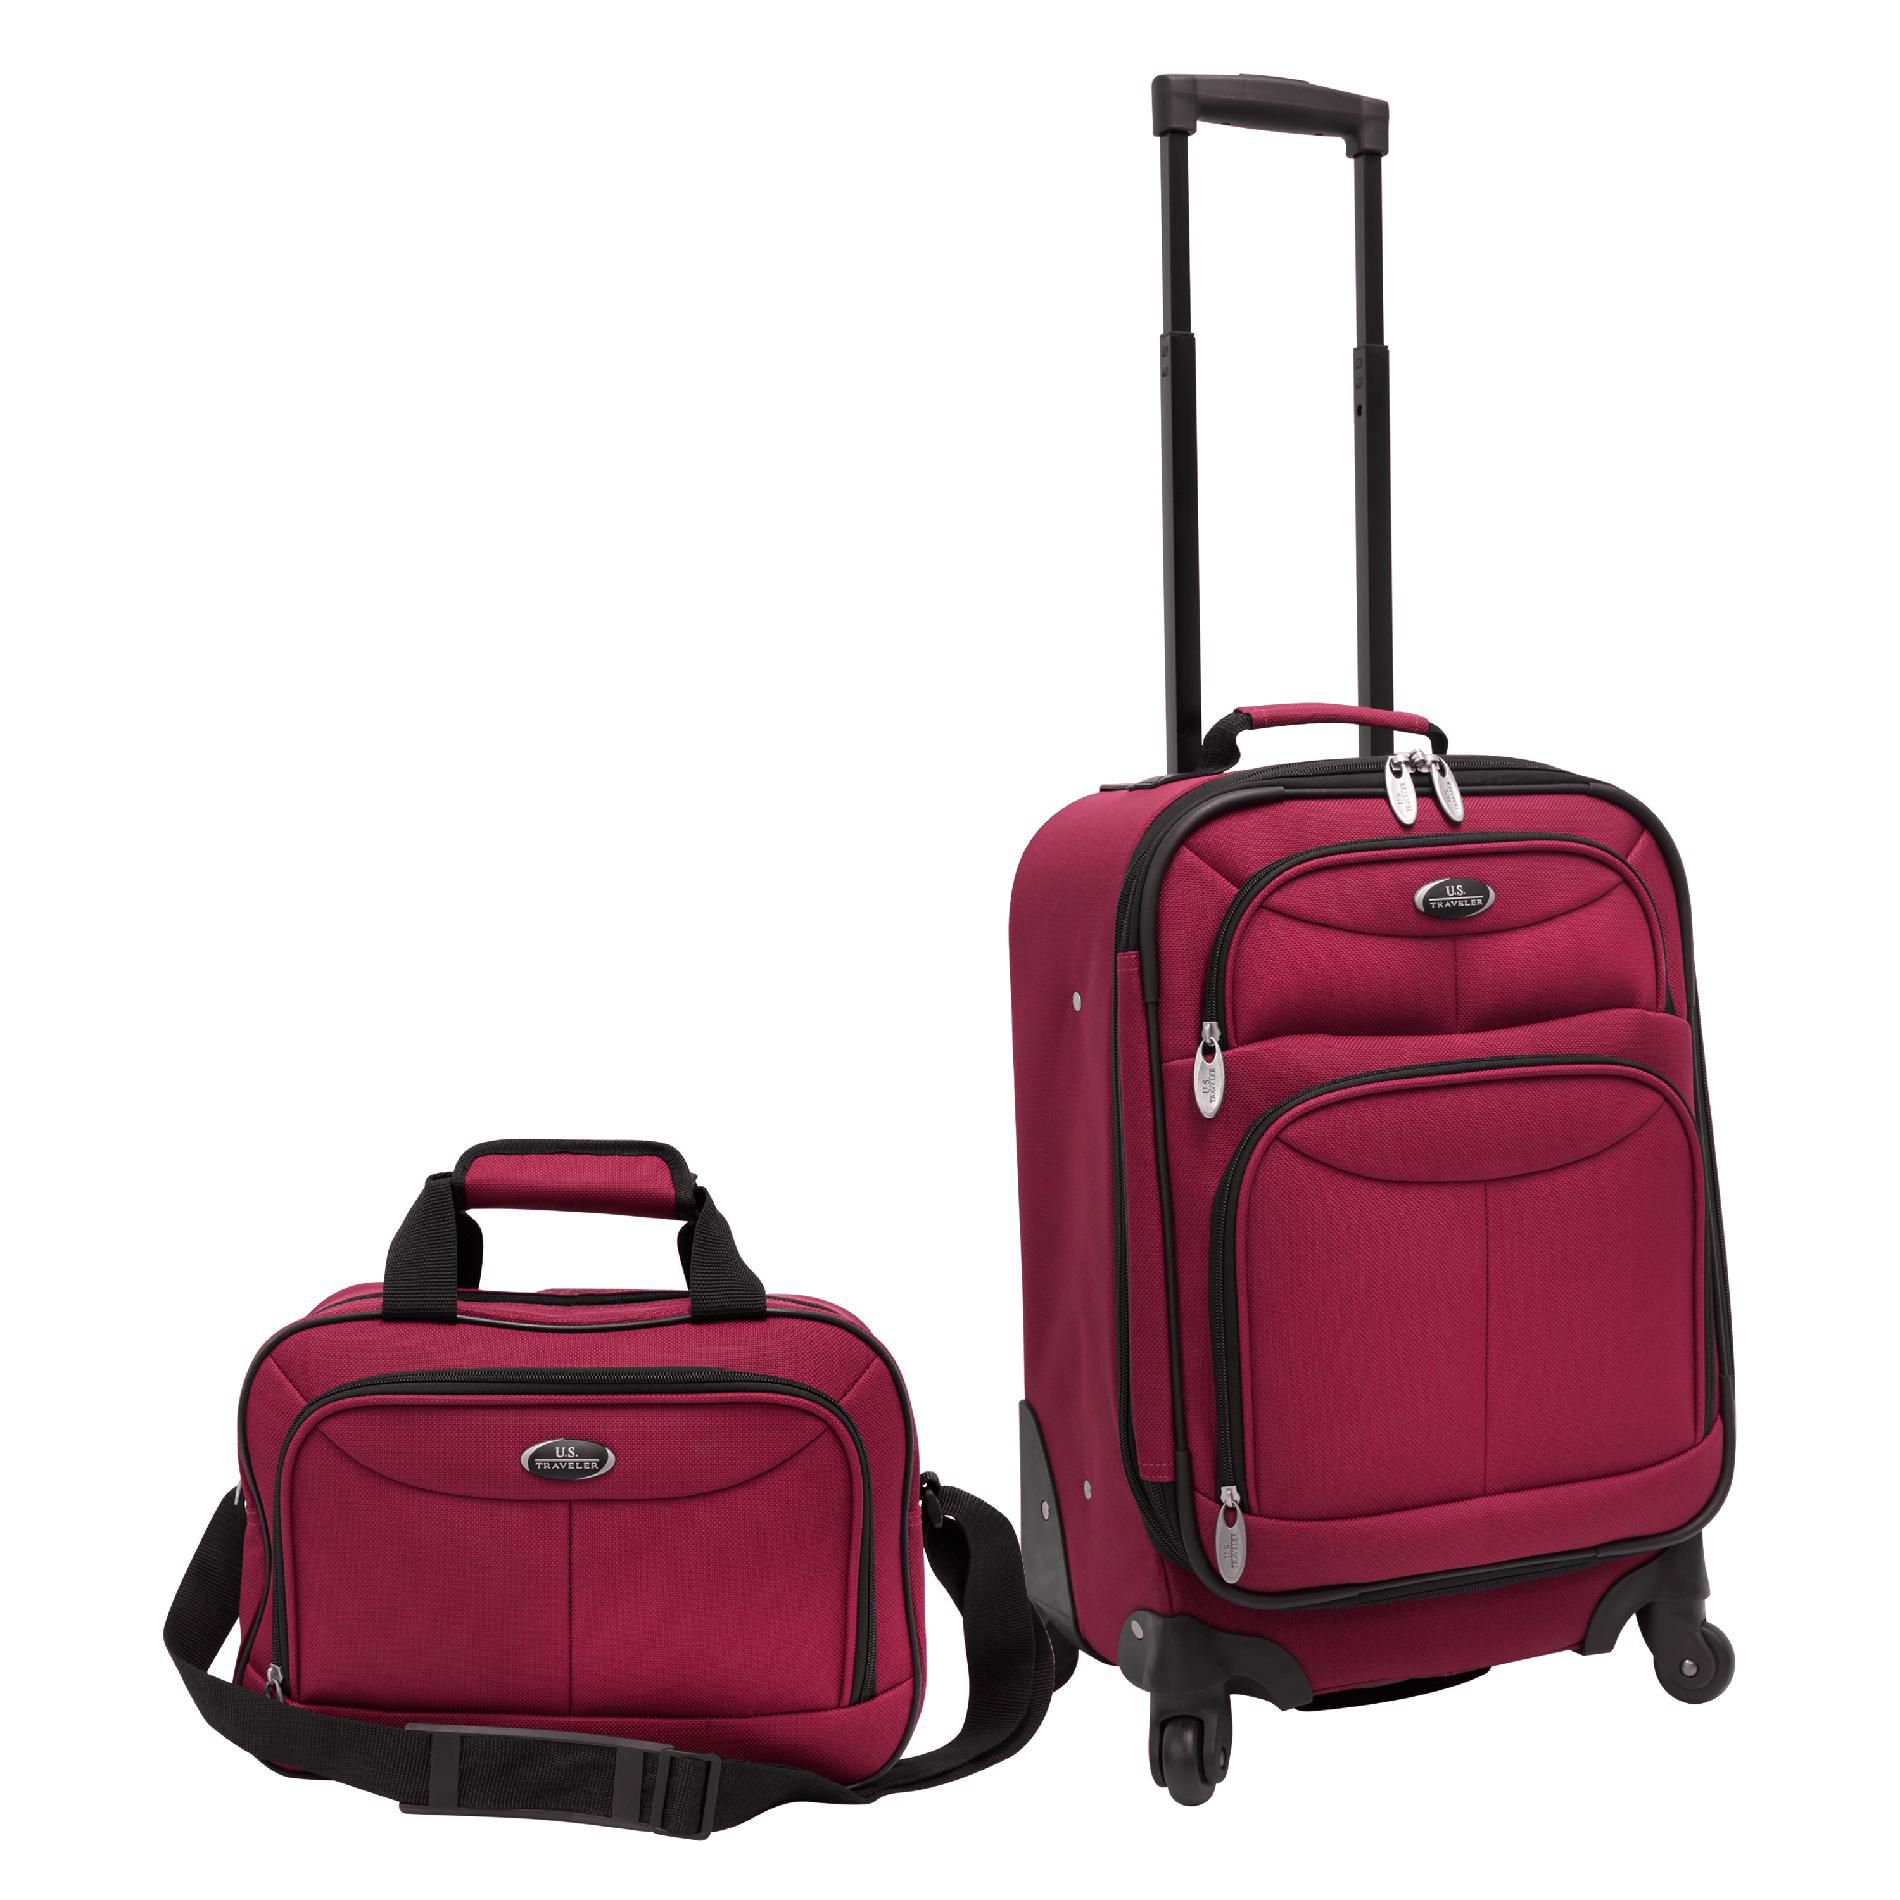 U.S. Traveler Fashion 2-piece Carry-on Luggage Set, Maroon - Home - Luggage & Bags - Luggage ...